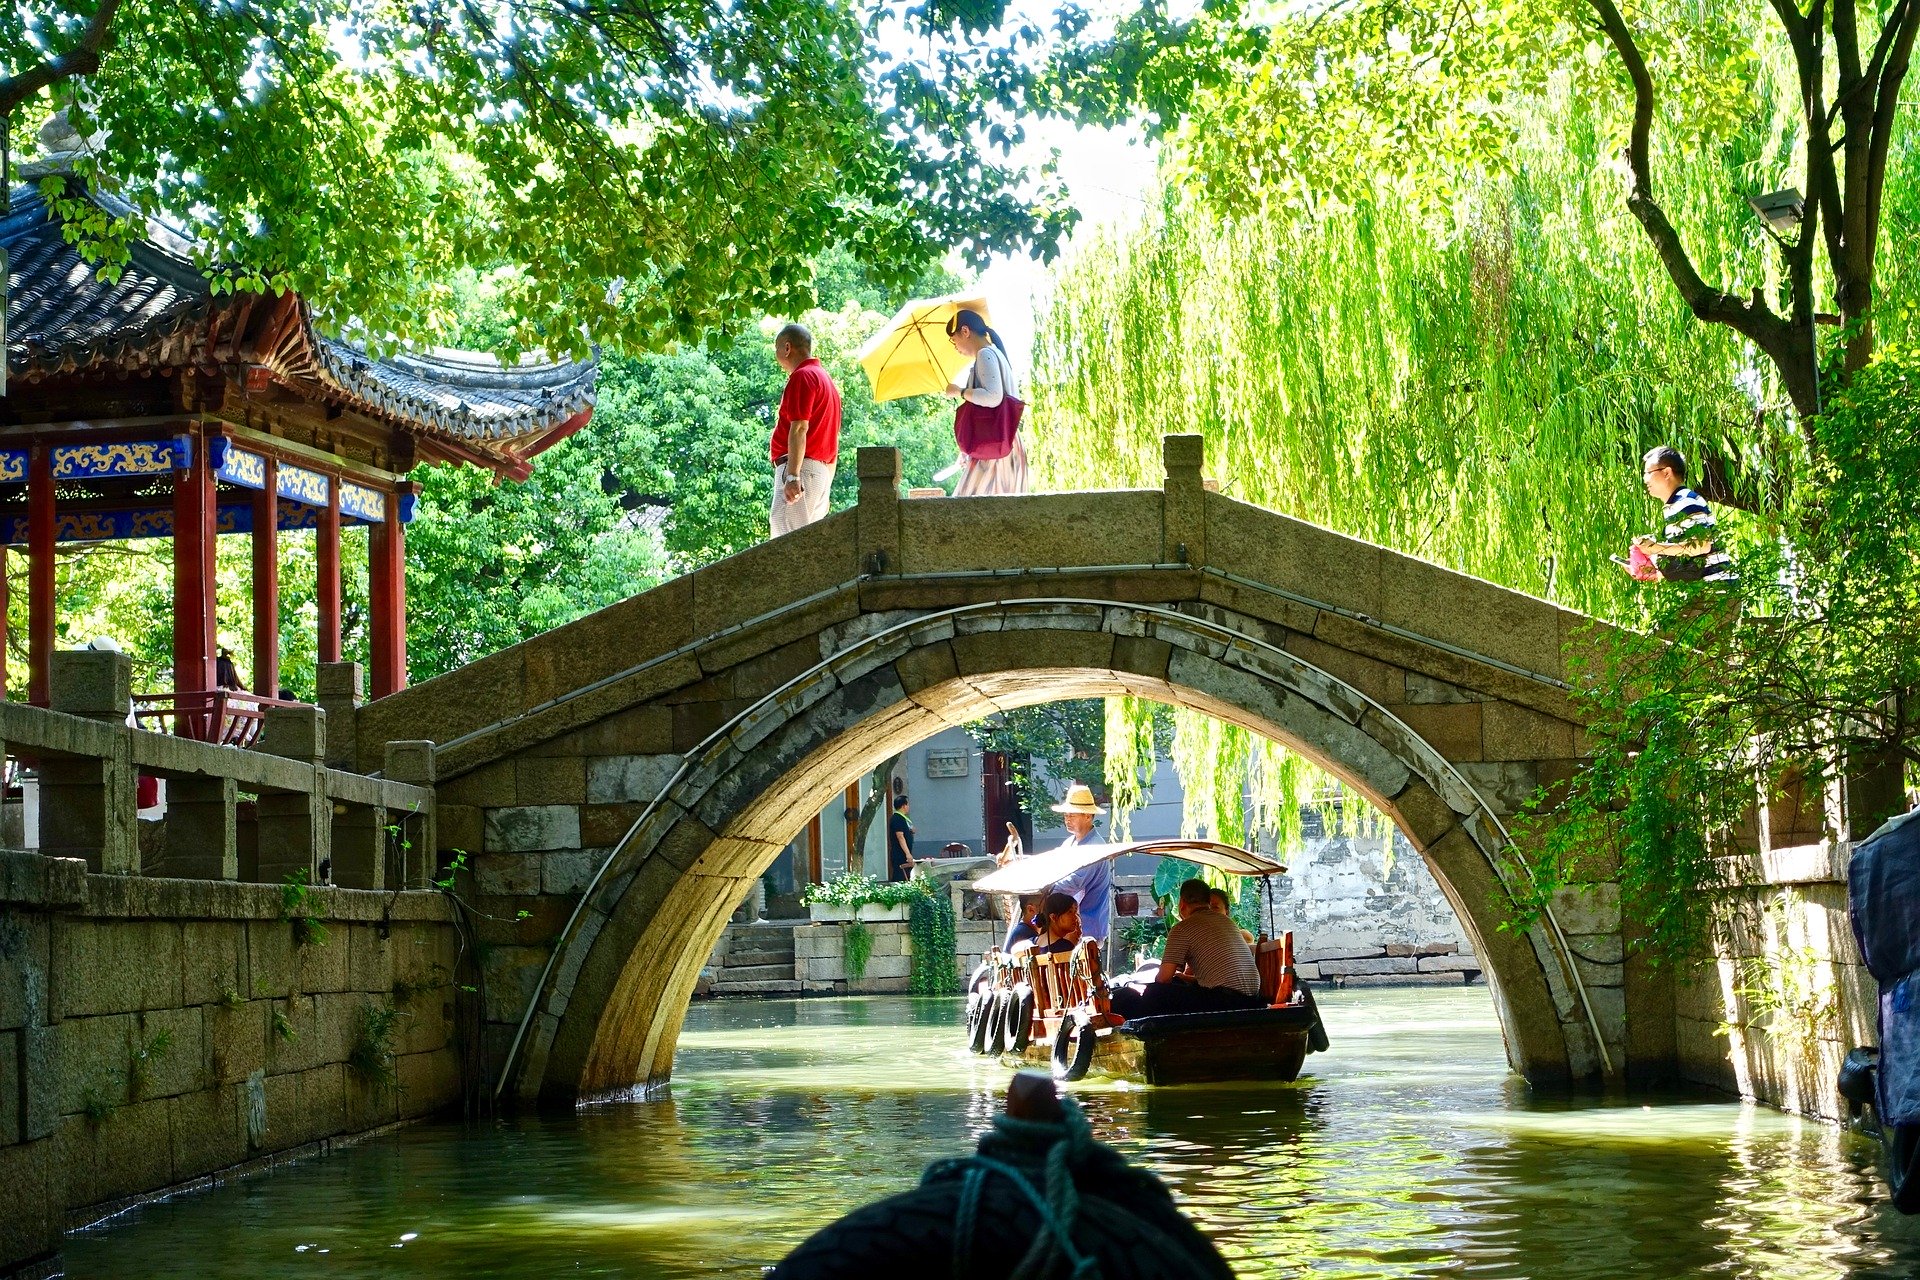 Suzhou, through the eyes of a Pixabay photographer